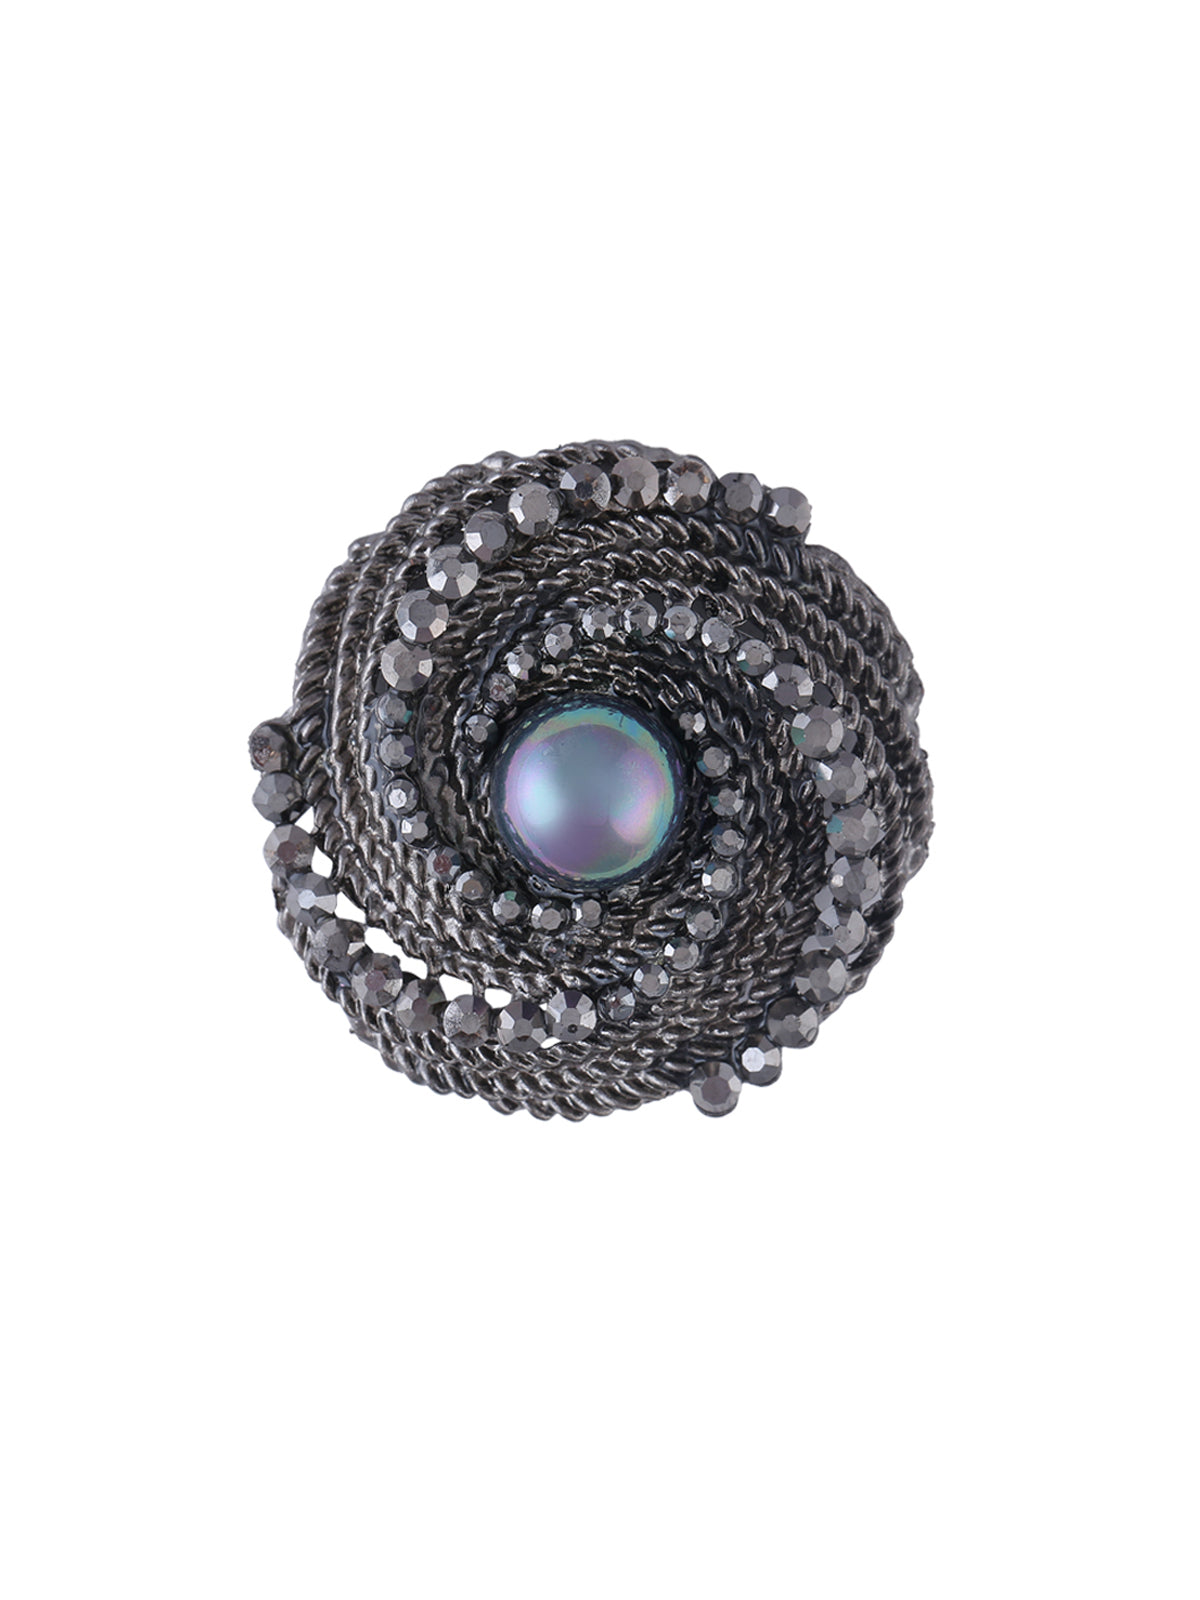 Black Nikel (Gunmetal) Colour Vintage Design Diamond & Pearl Brooch